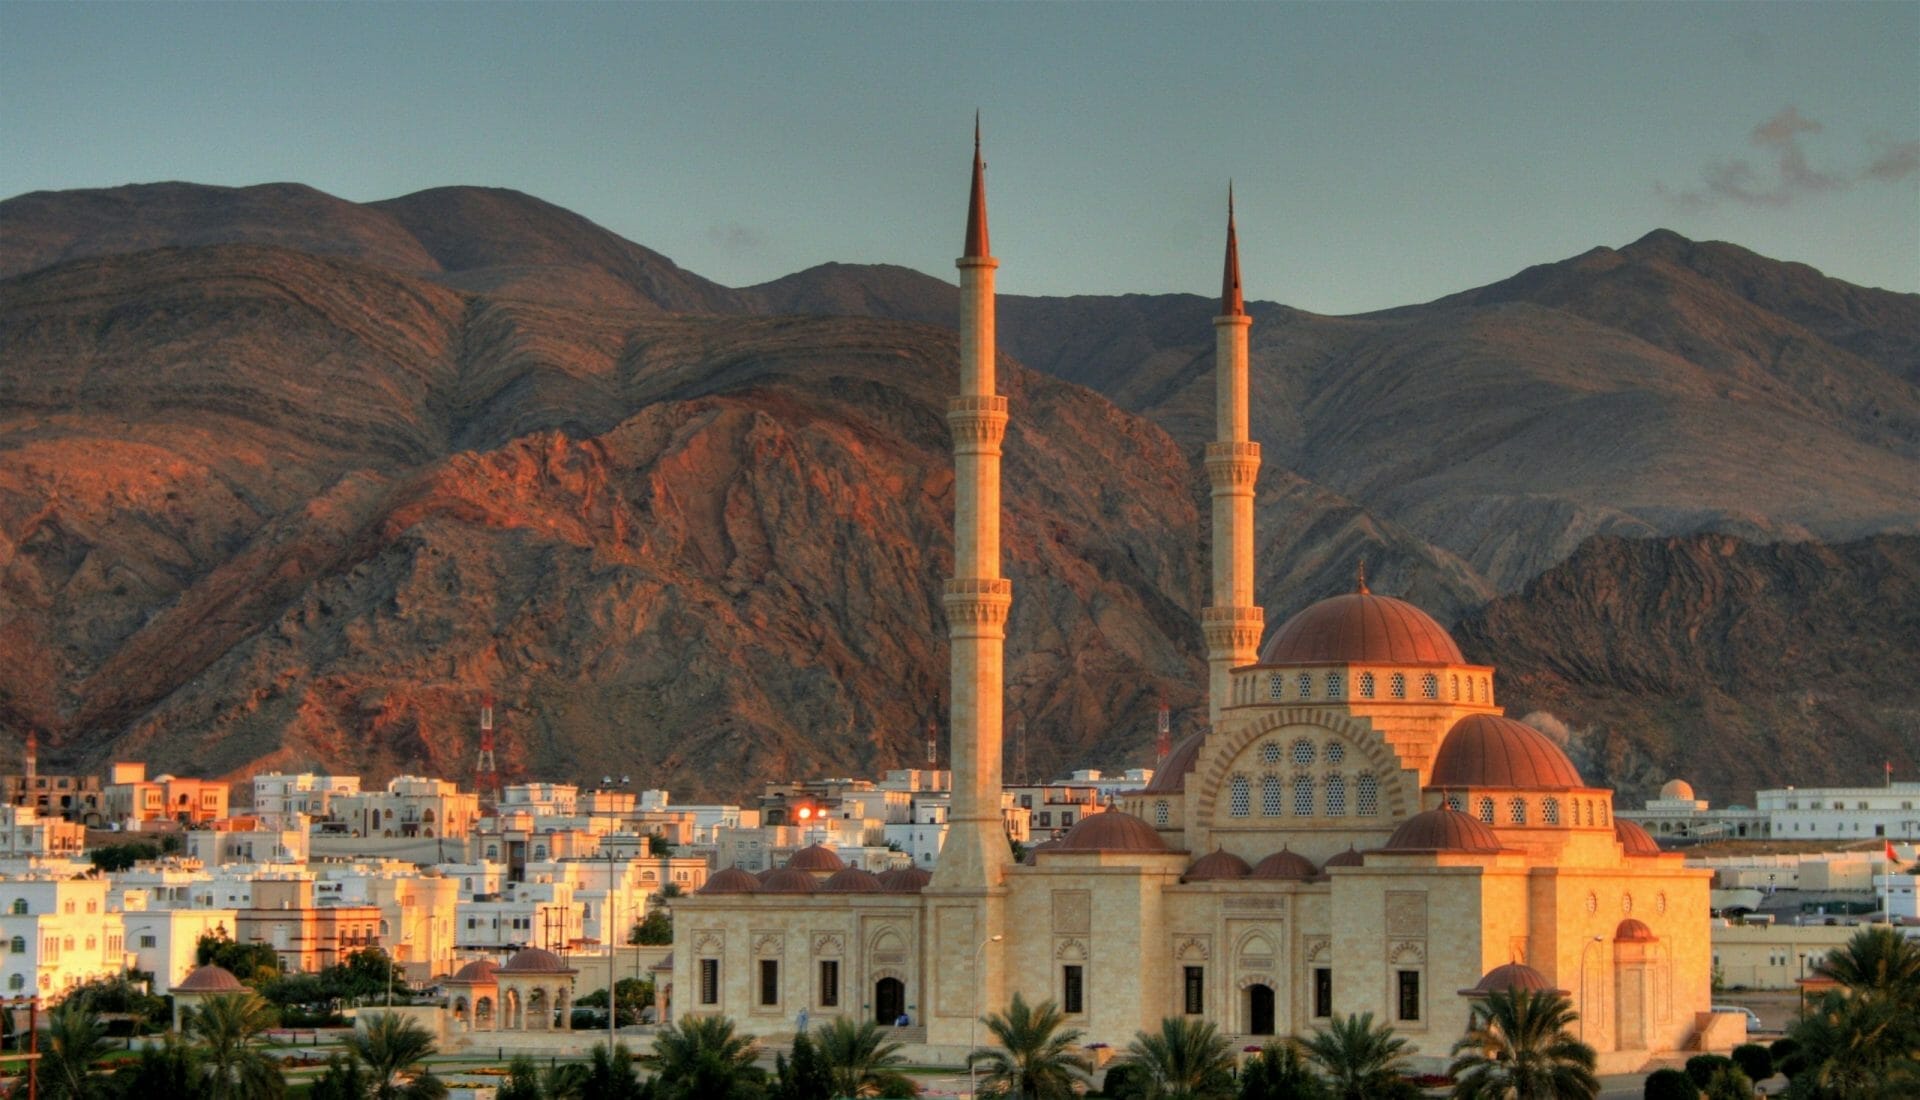 Sultanato de Omán - Mezquita